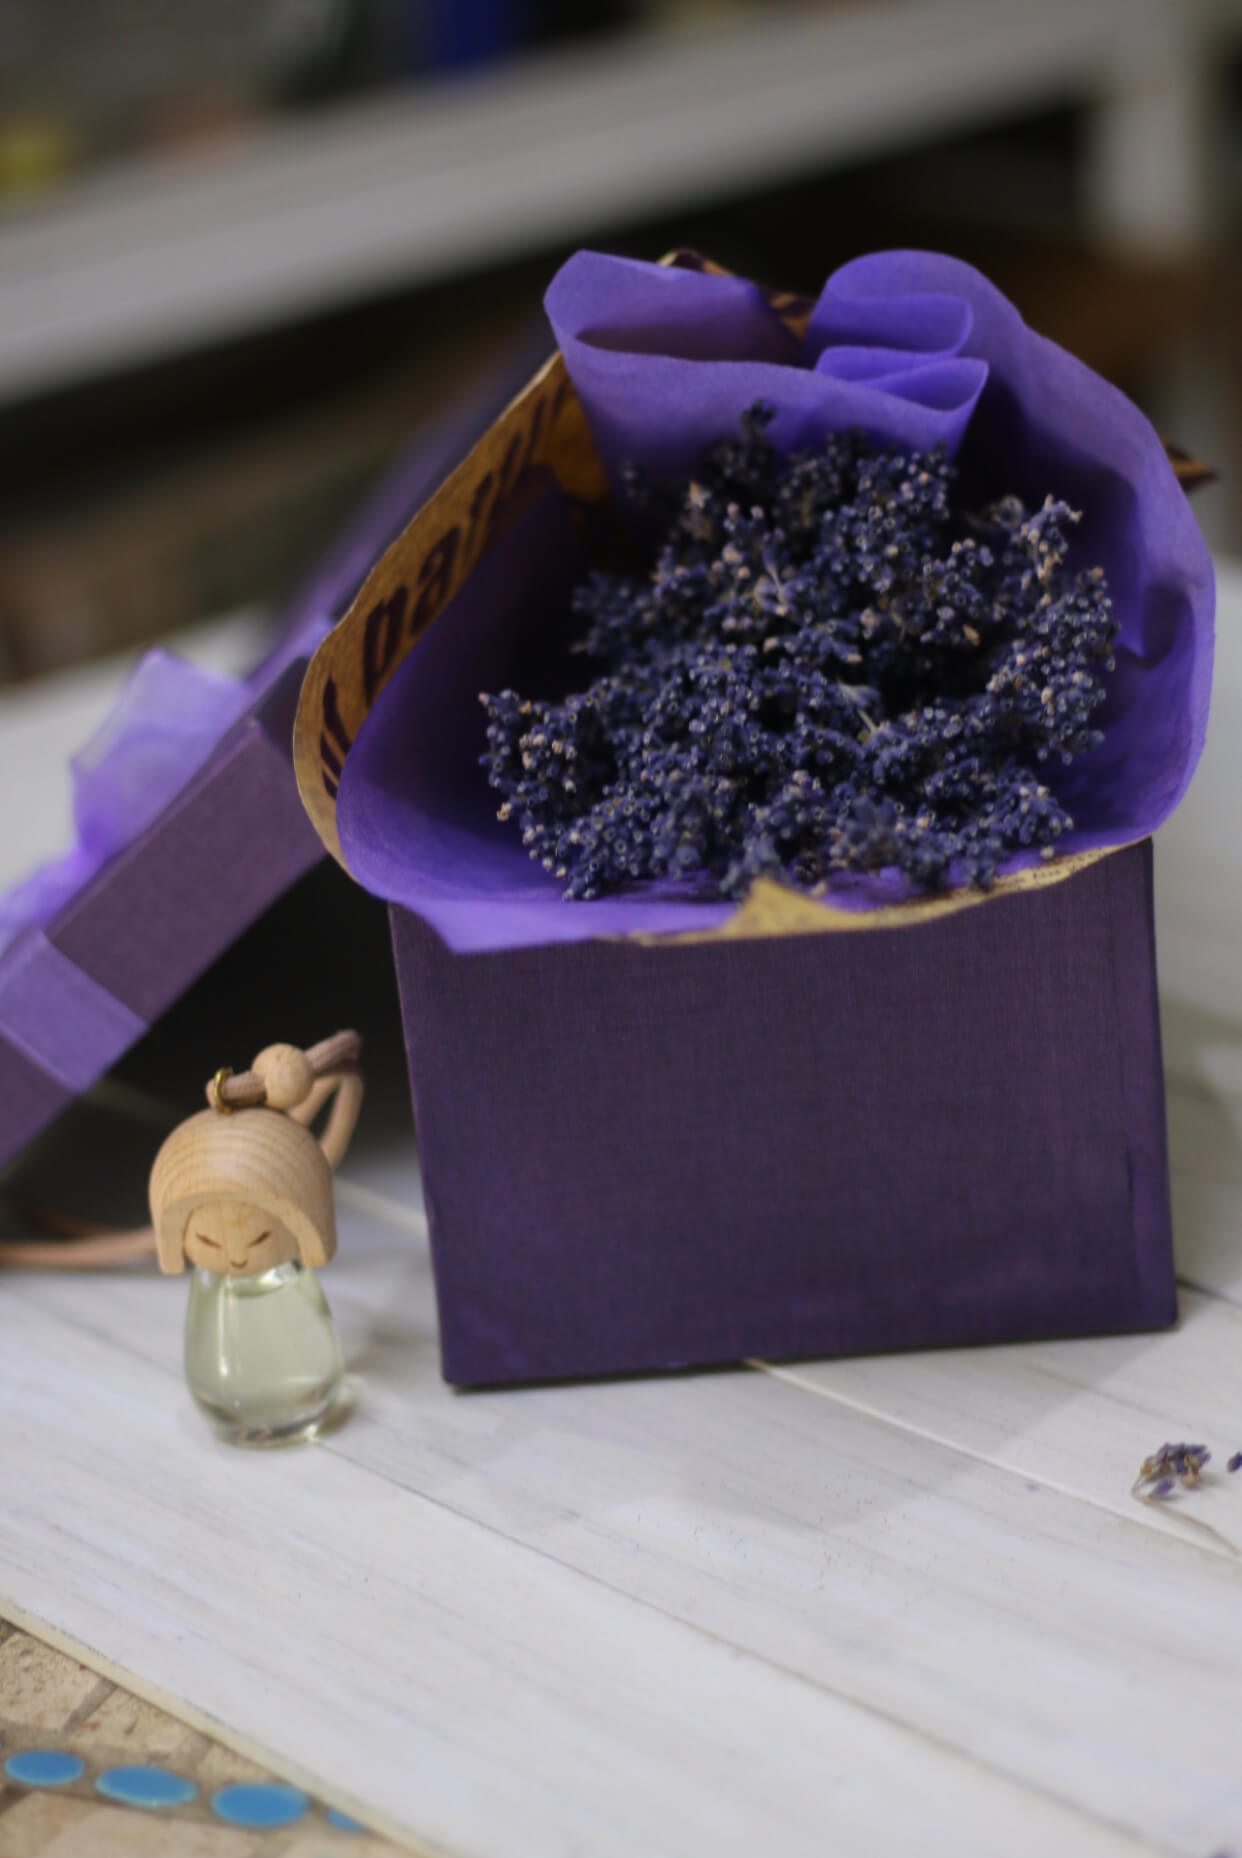 hoa lavender khô